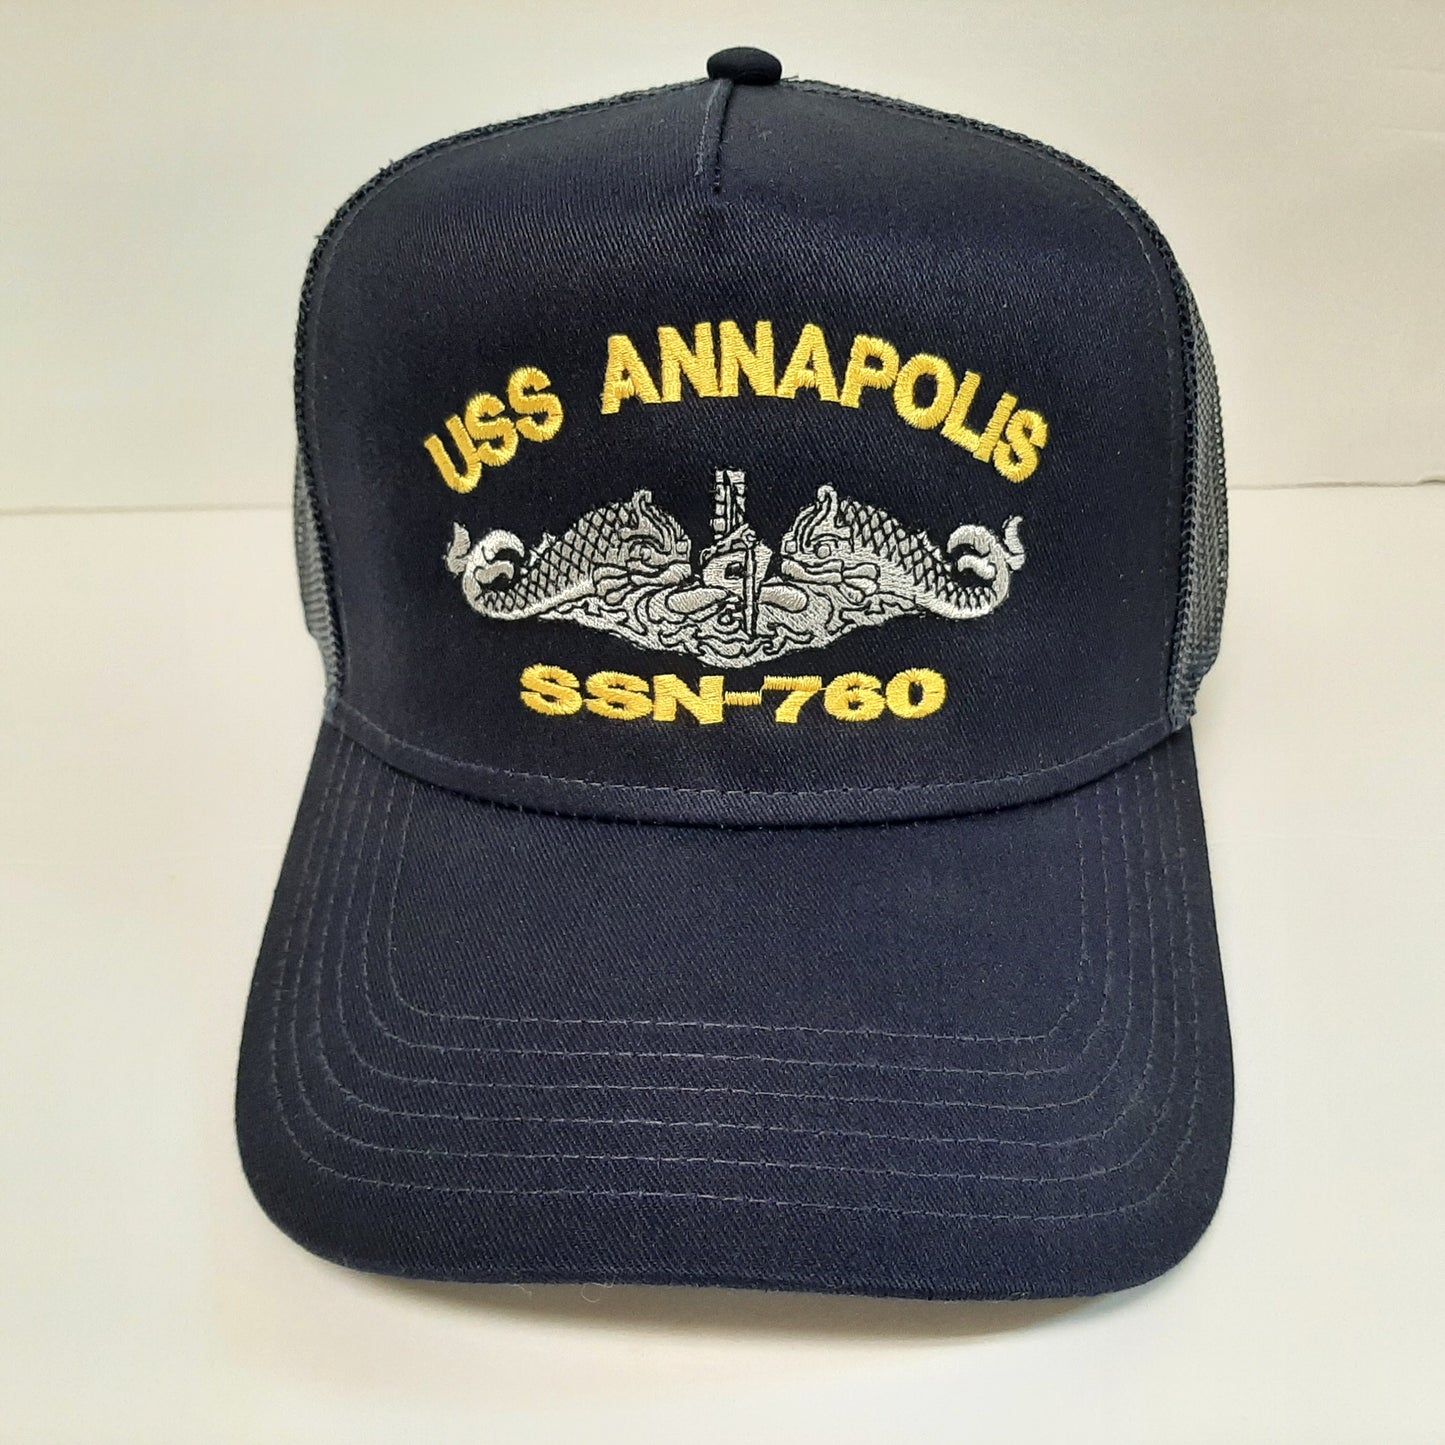 USS Annapolis SSN-760 U.S Navy Ship Boat Hat Cap Mesh Snapback Blue Curved Bill